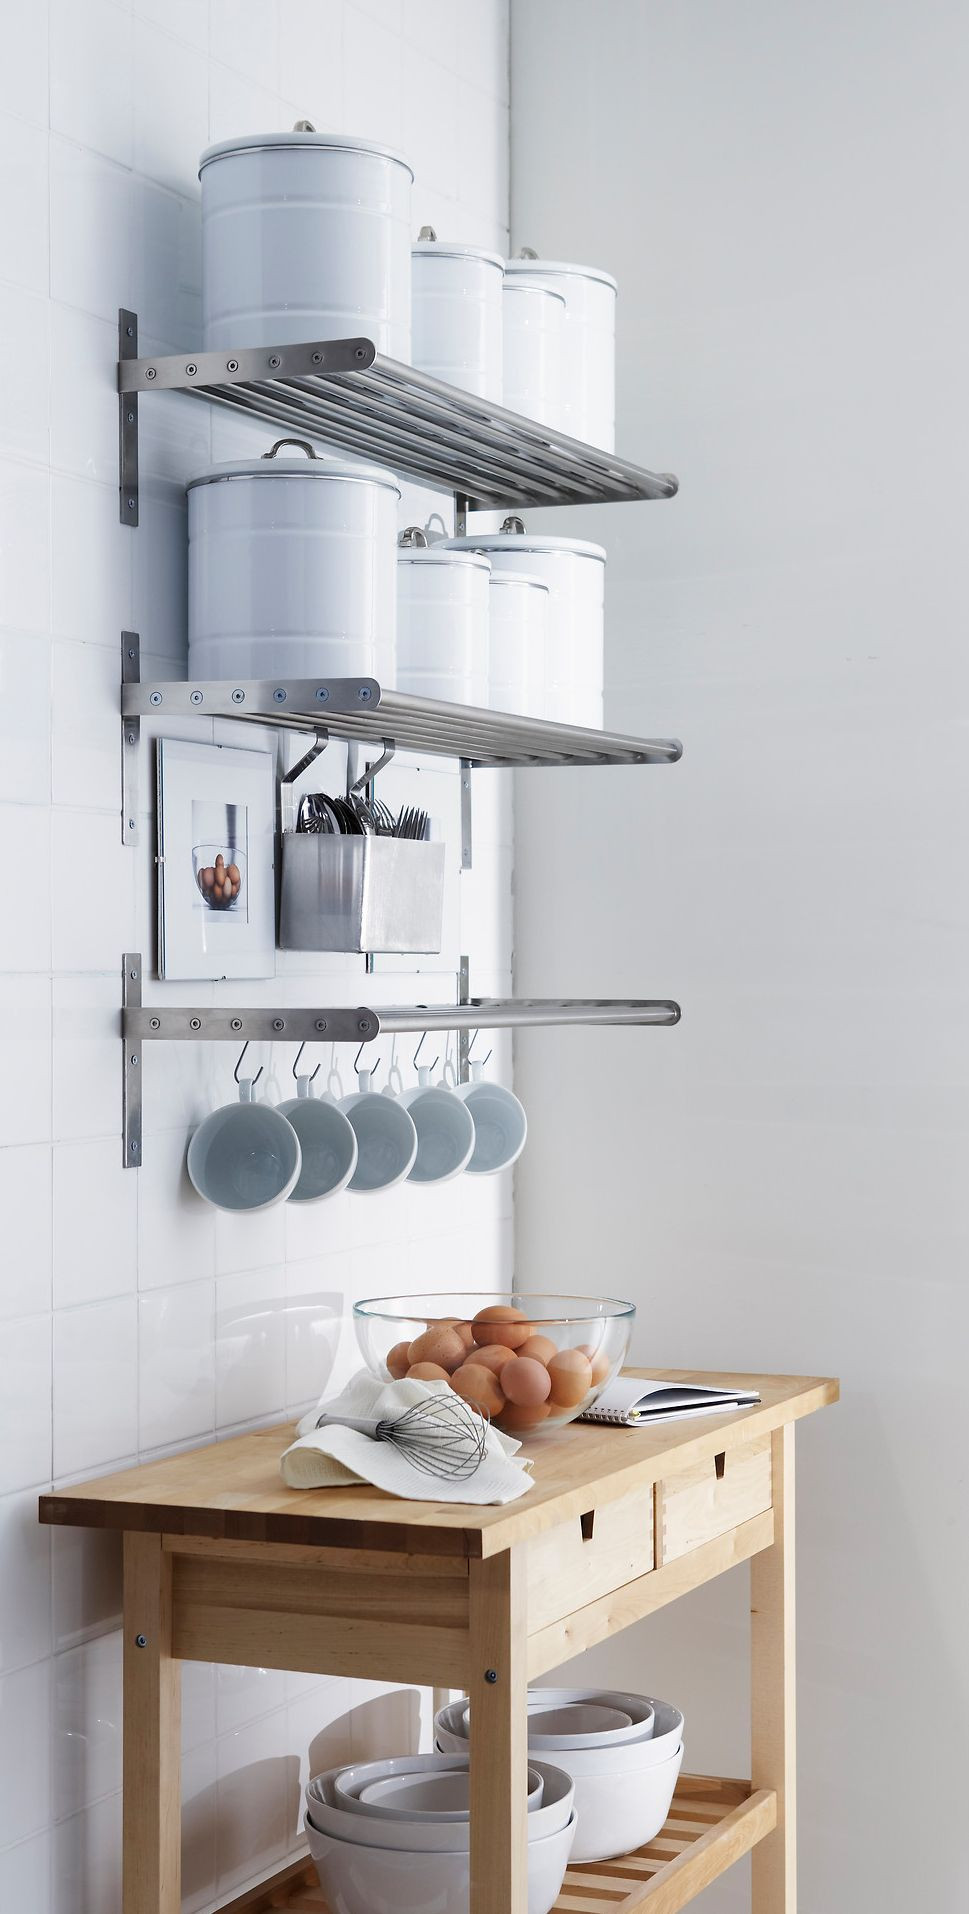 Ikea Kitchen Organization
 65 Ingenious Kitchen Organization Tips And Storage Ideas